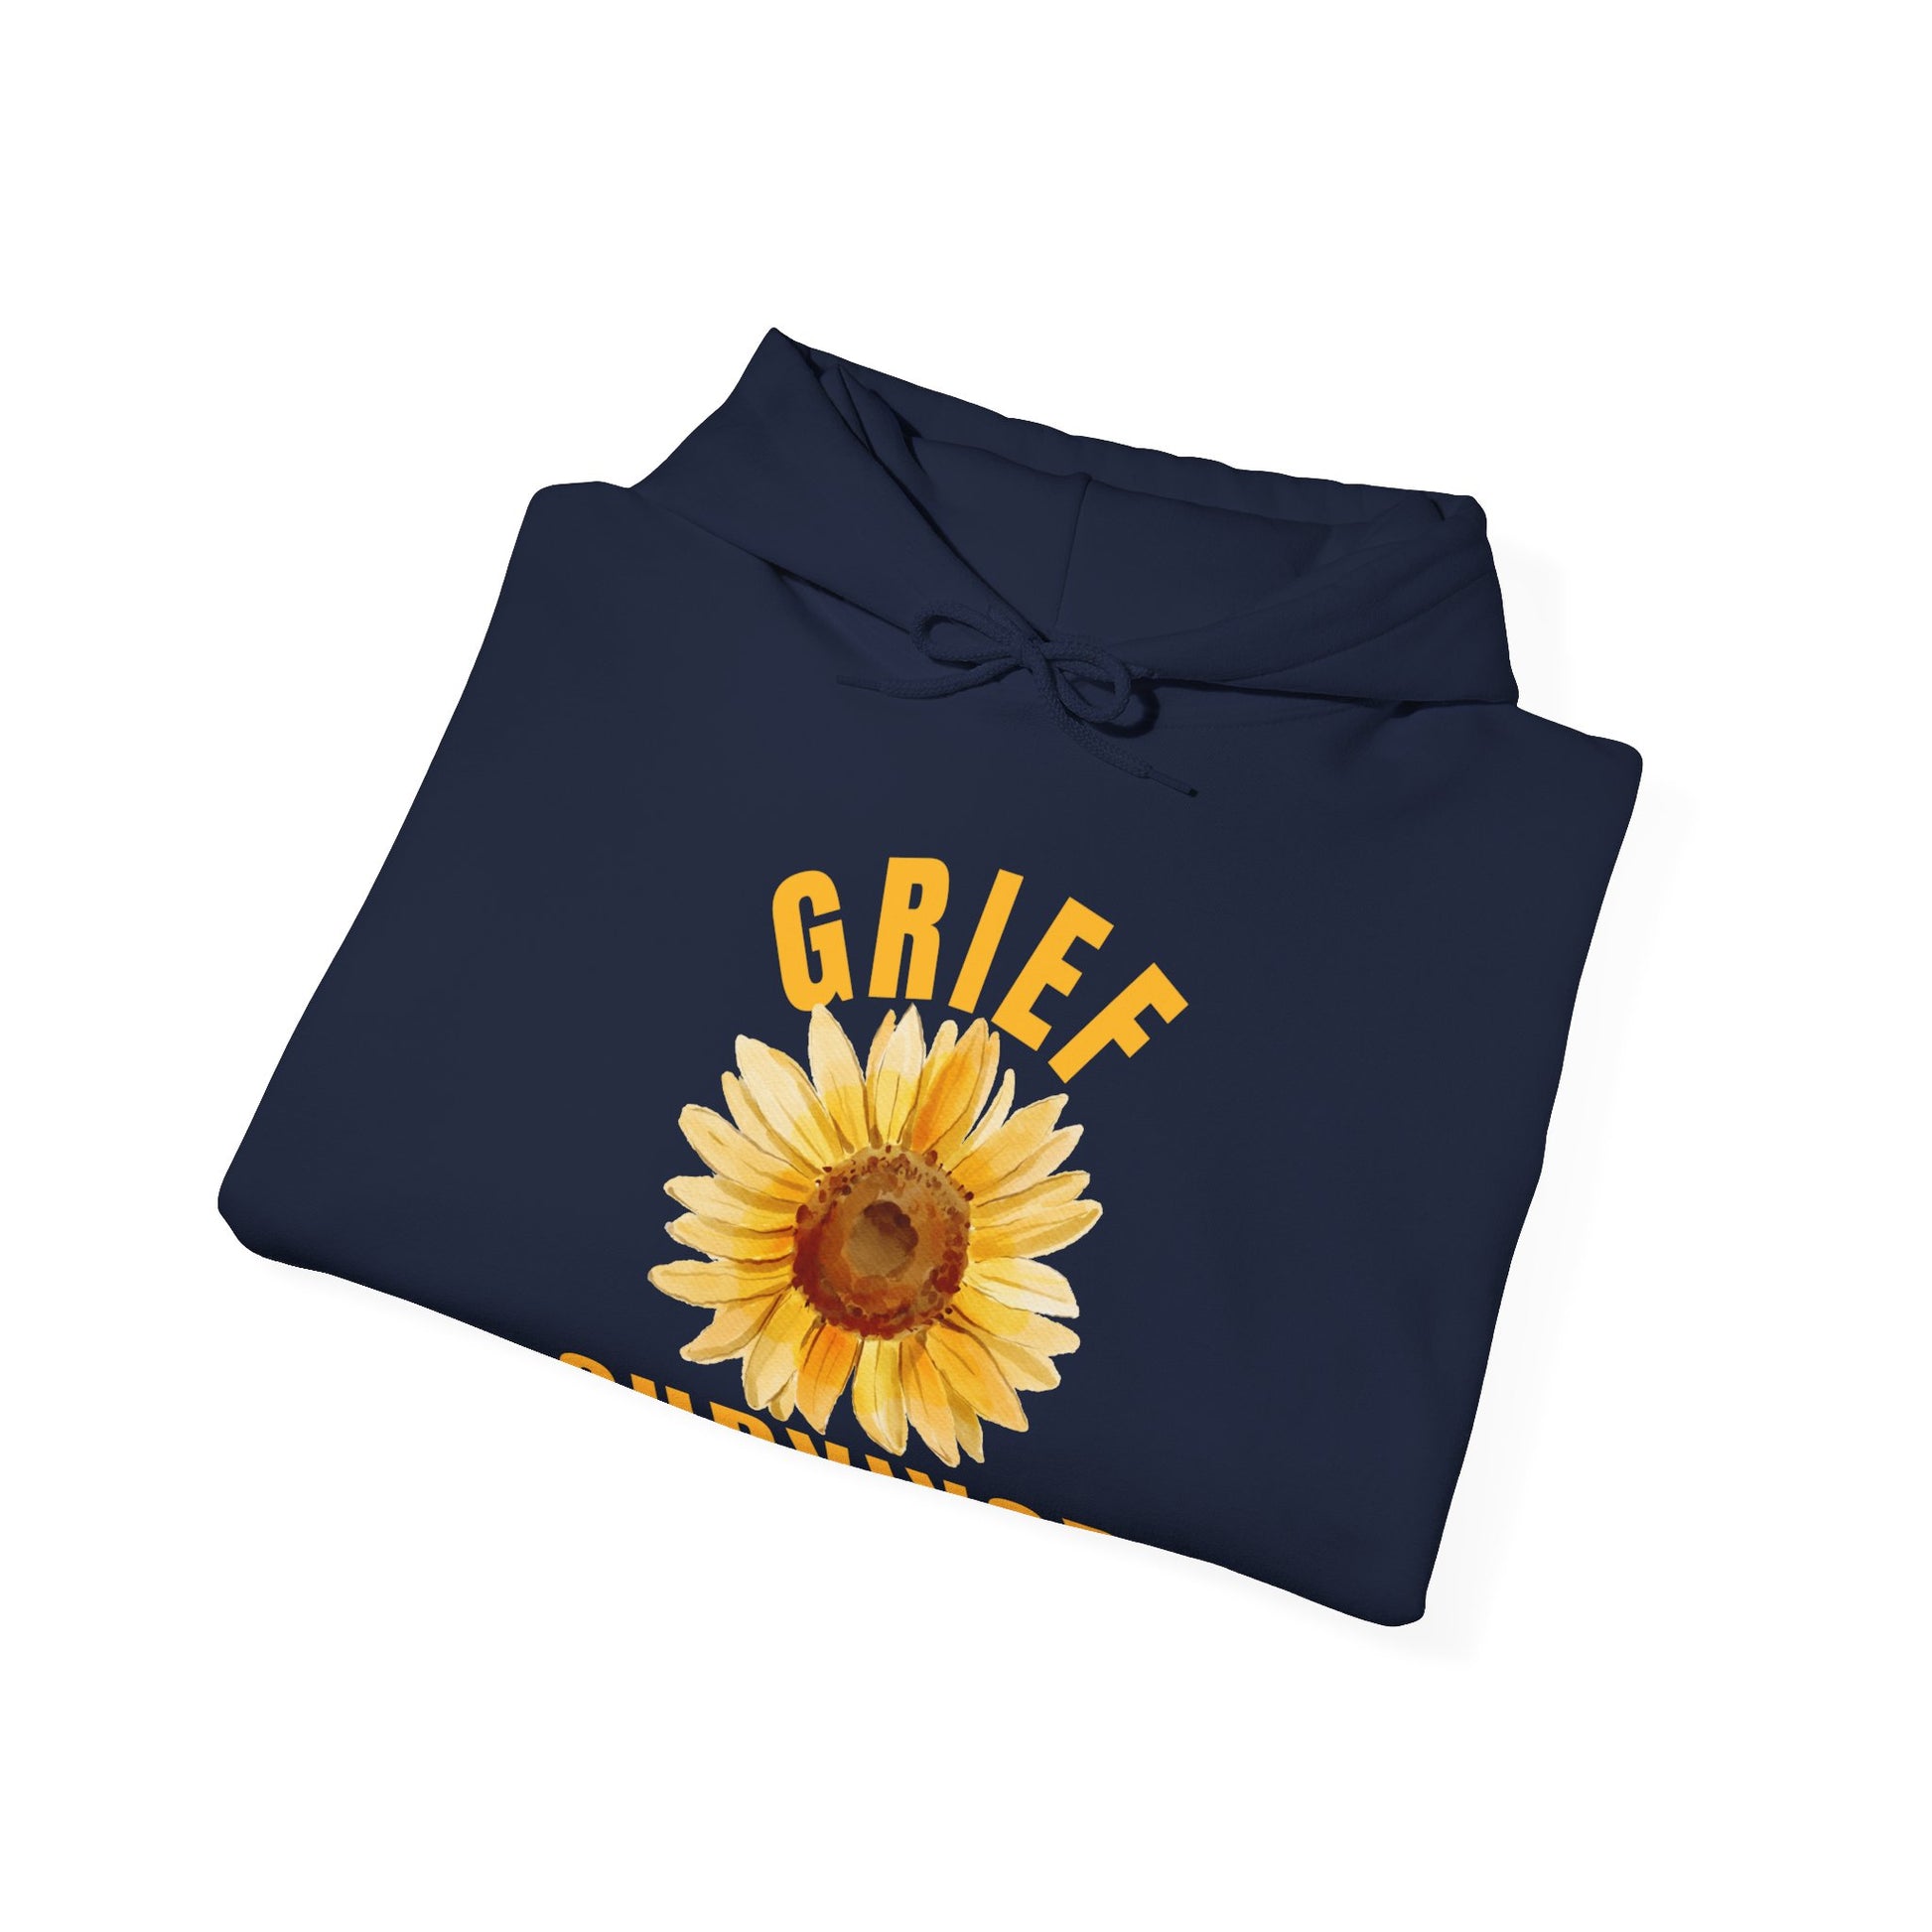 Grief Survivor Sunflower Gildan 18500 Hooded Sweatshirt in Navy. Statement of survival and hope during hard times hoodie.